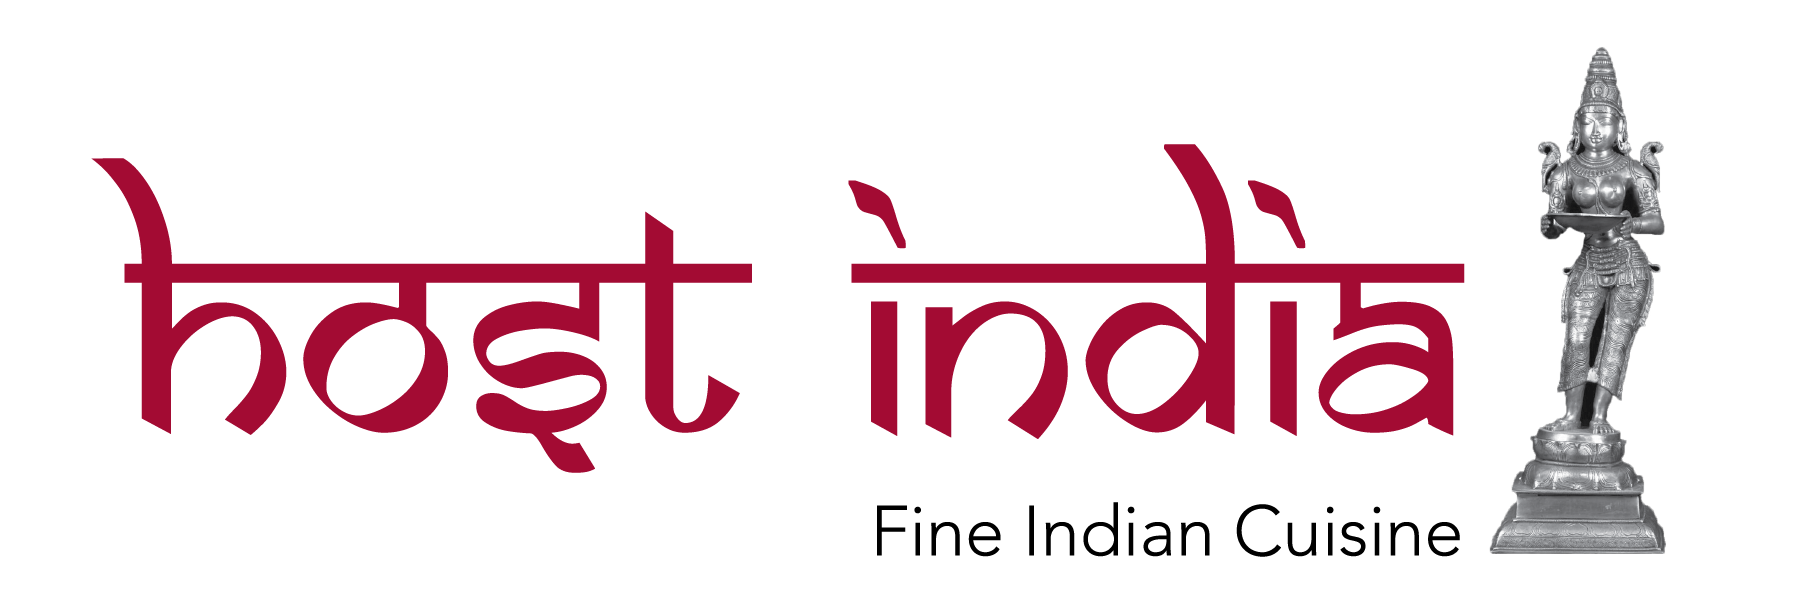 Host India – Ottawa South